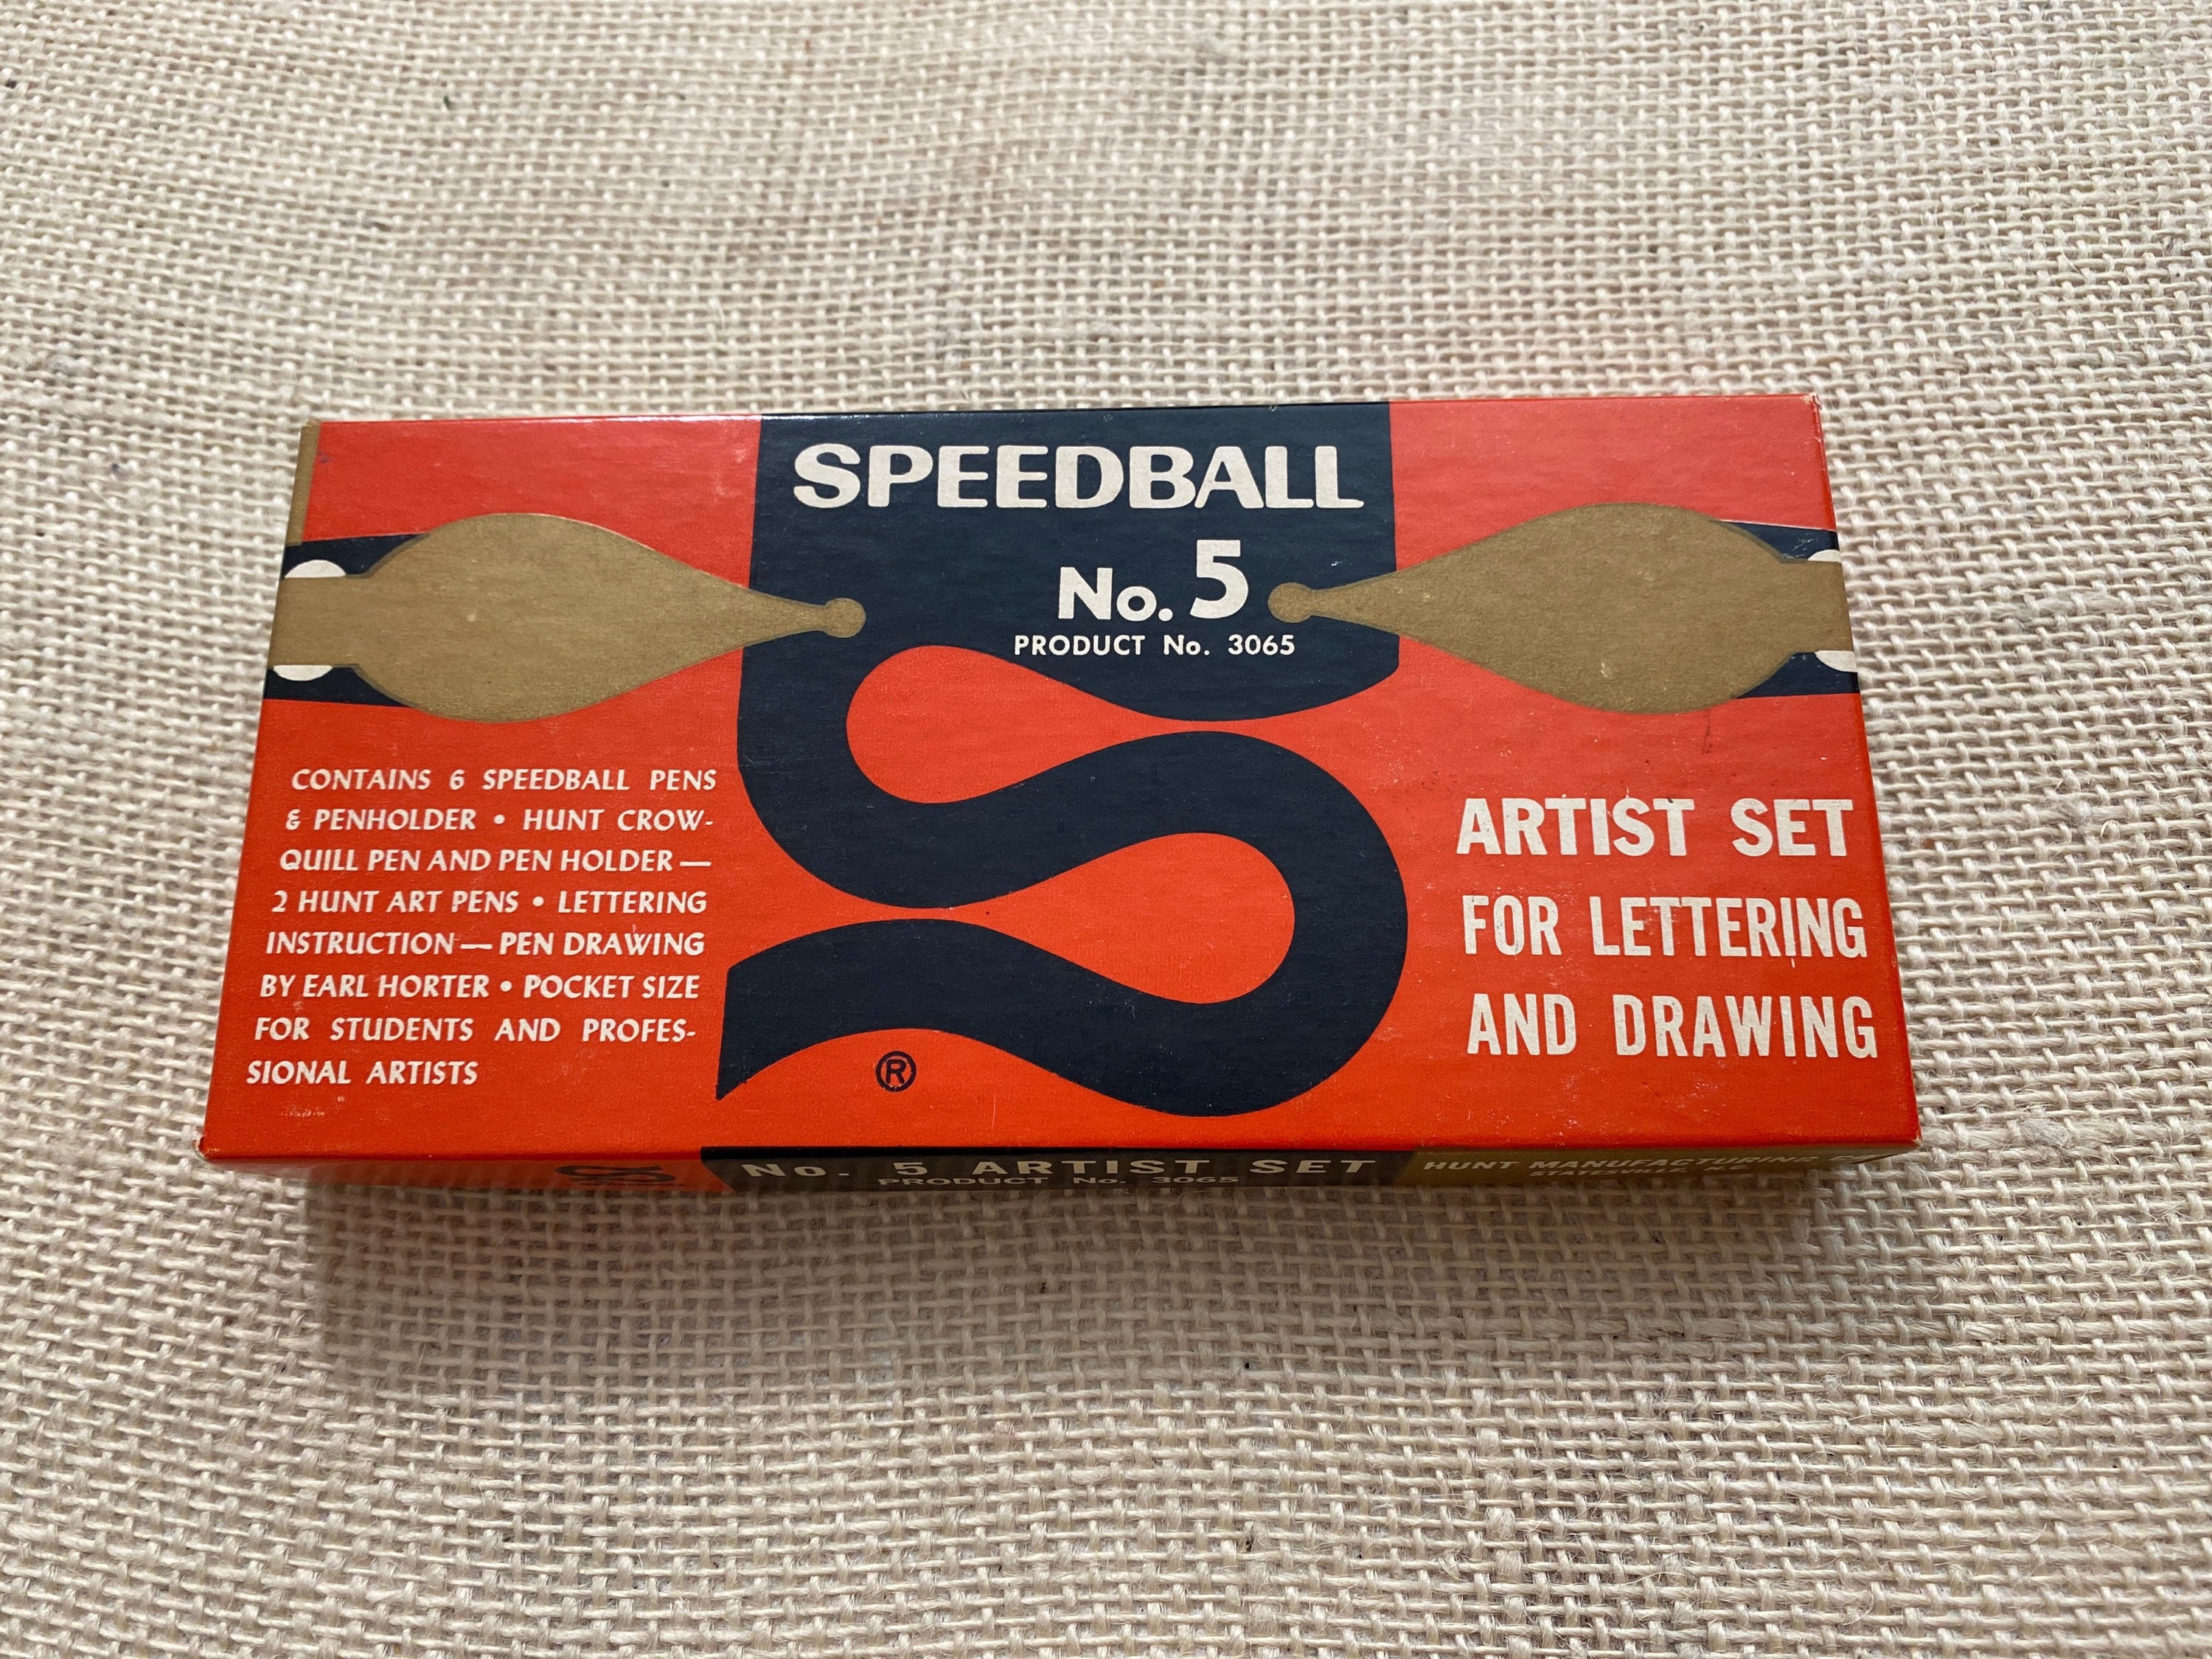 Screen Printing Kit For Fabric Vintage In Box Hunt Speedball Art